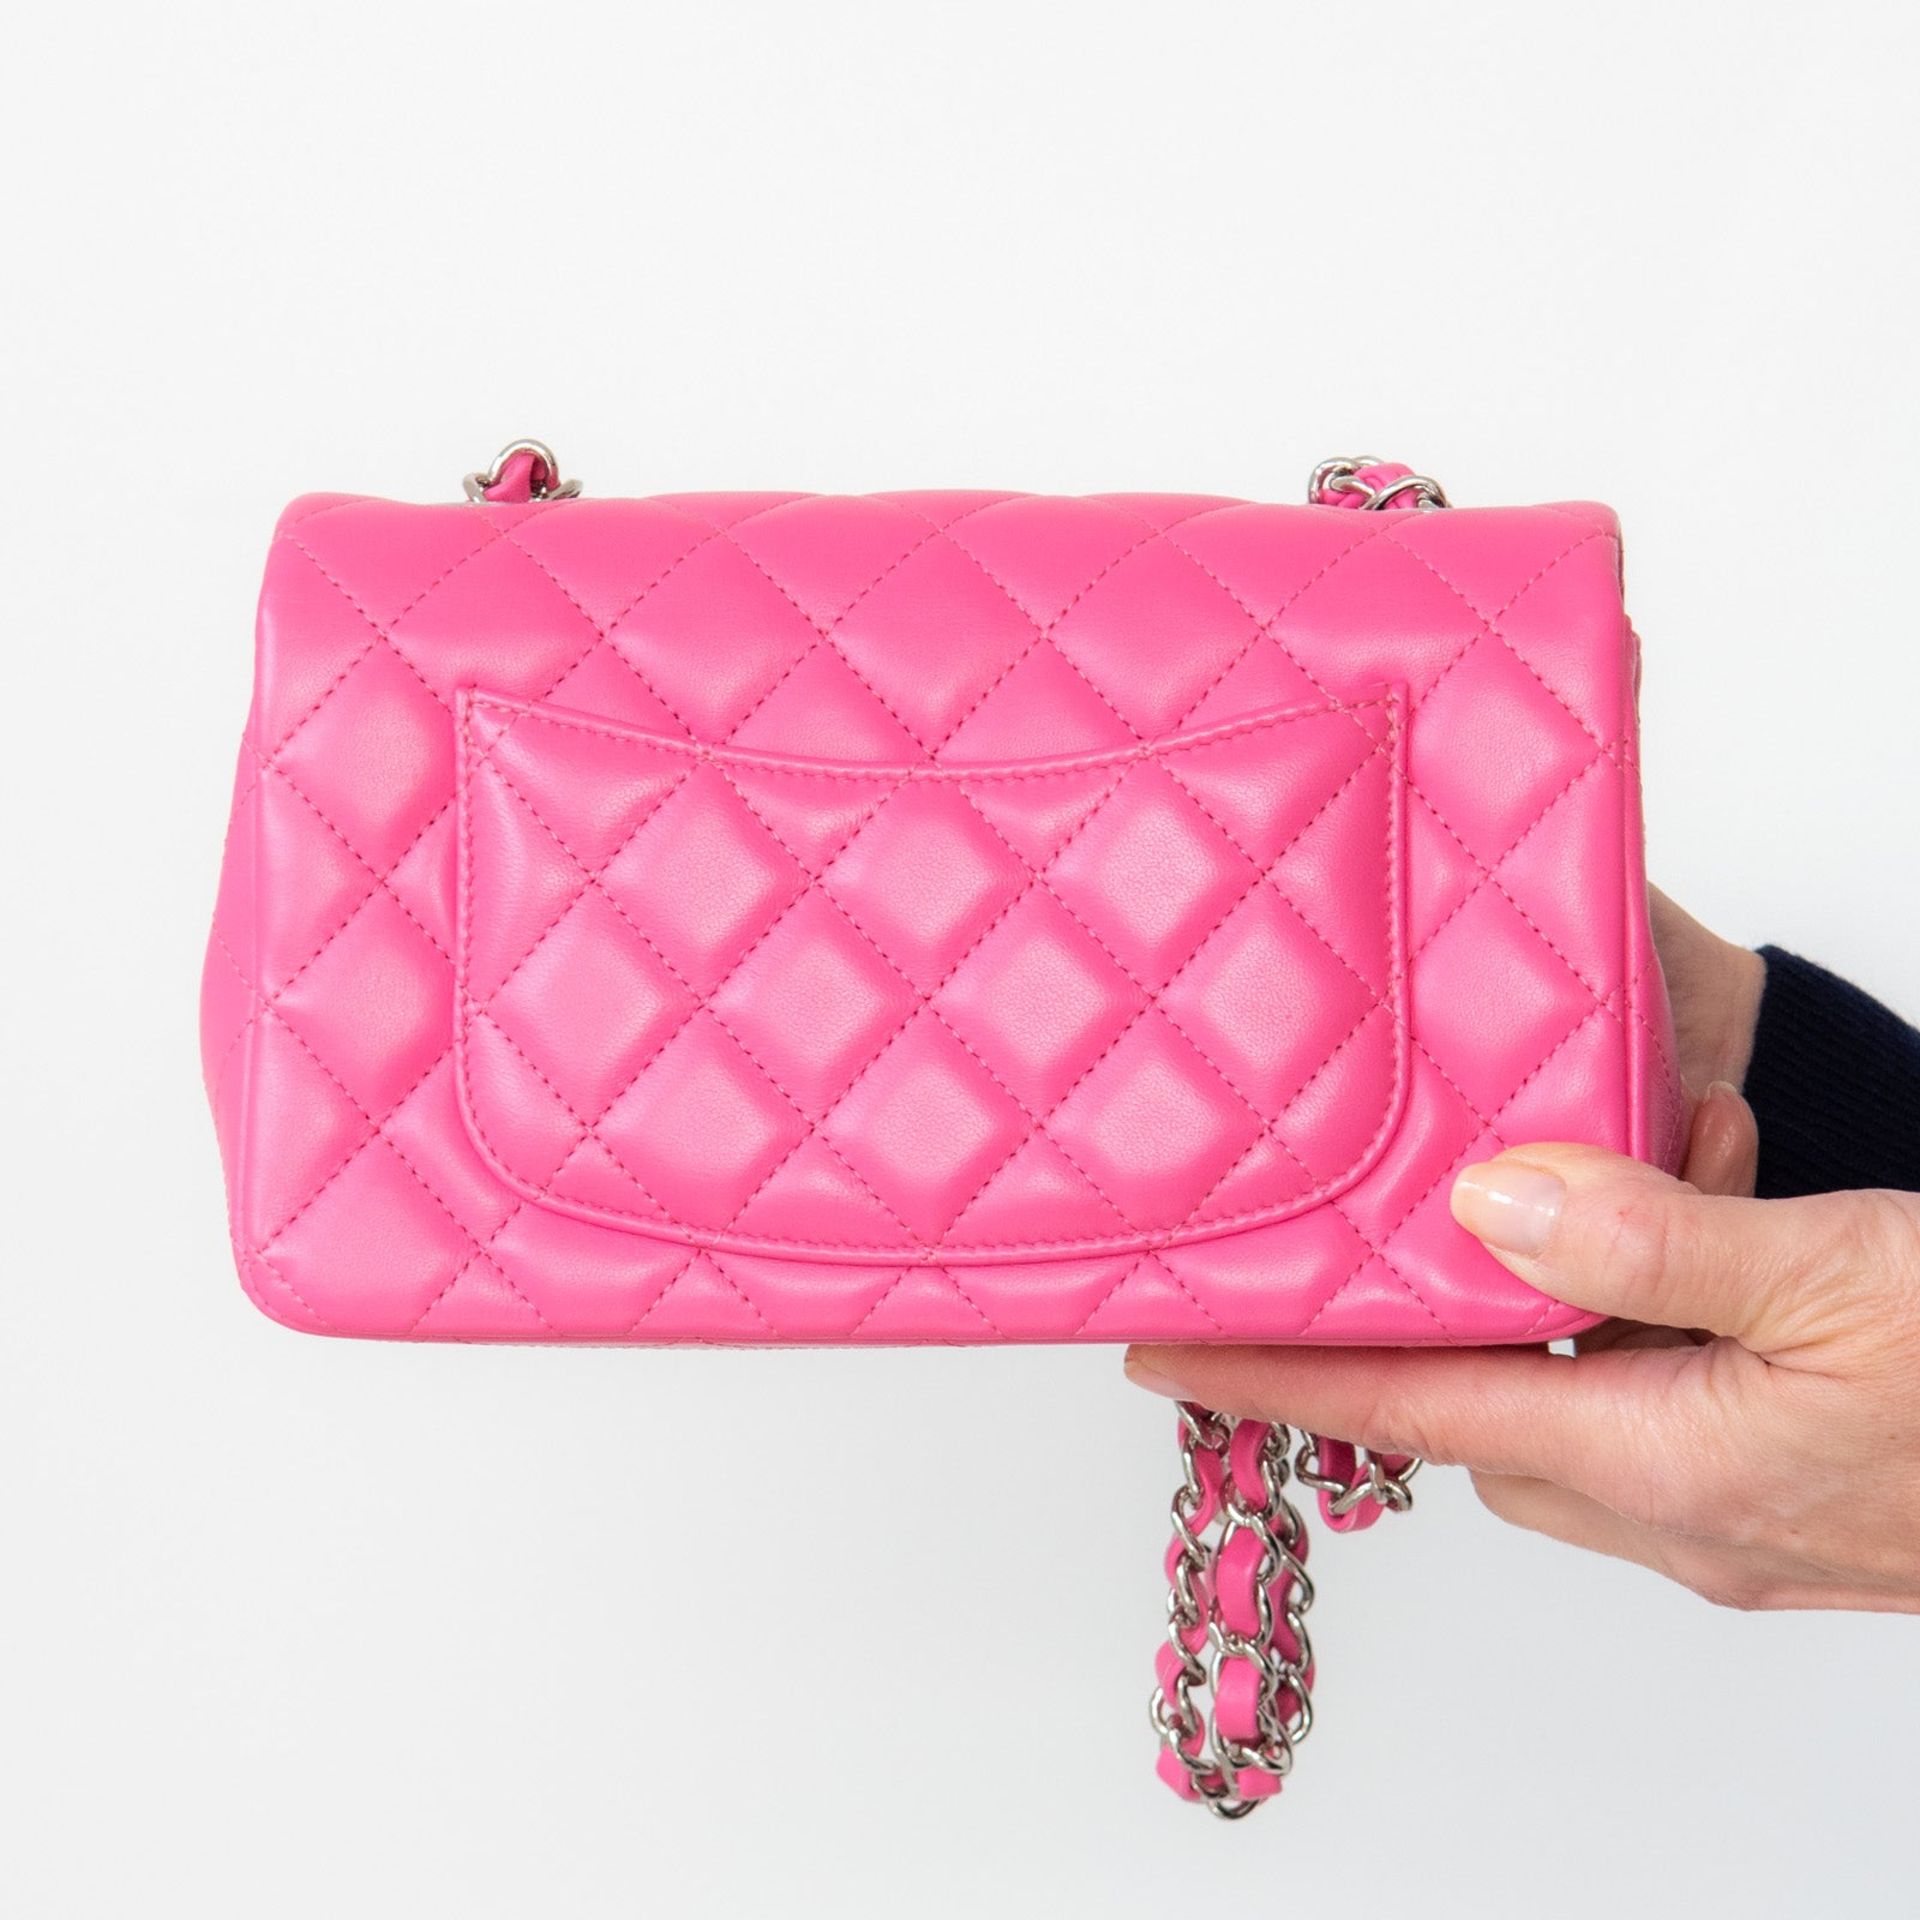 Chanel Pink Mini Rectangular Flap Bag - Image 4 of 13